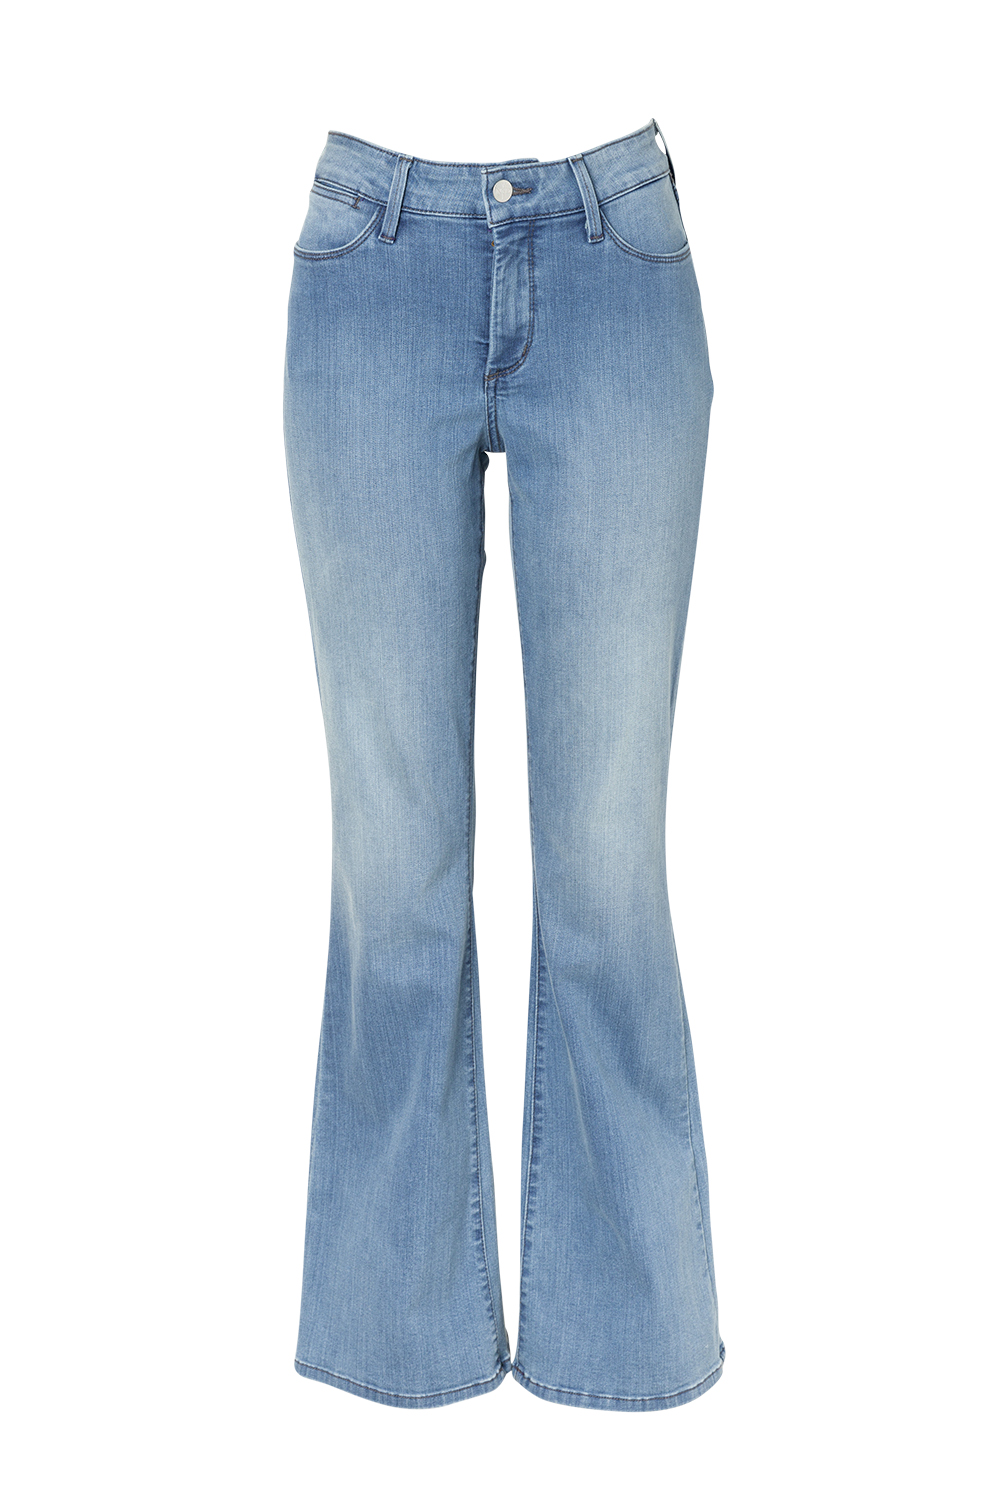 Jeans, $369, by NYDJ.